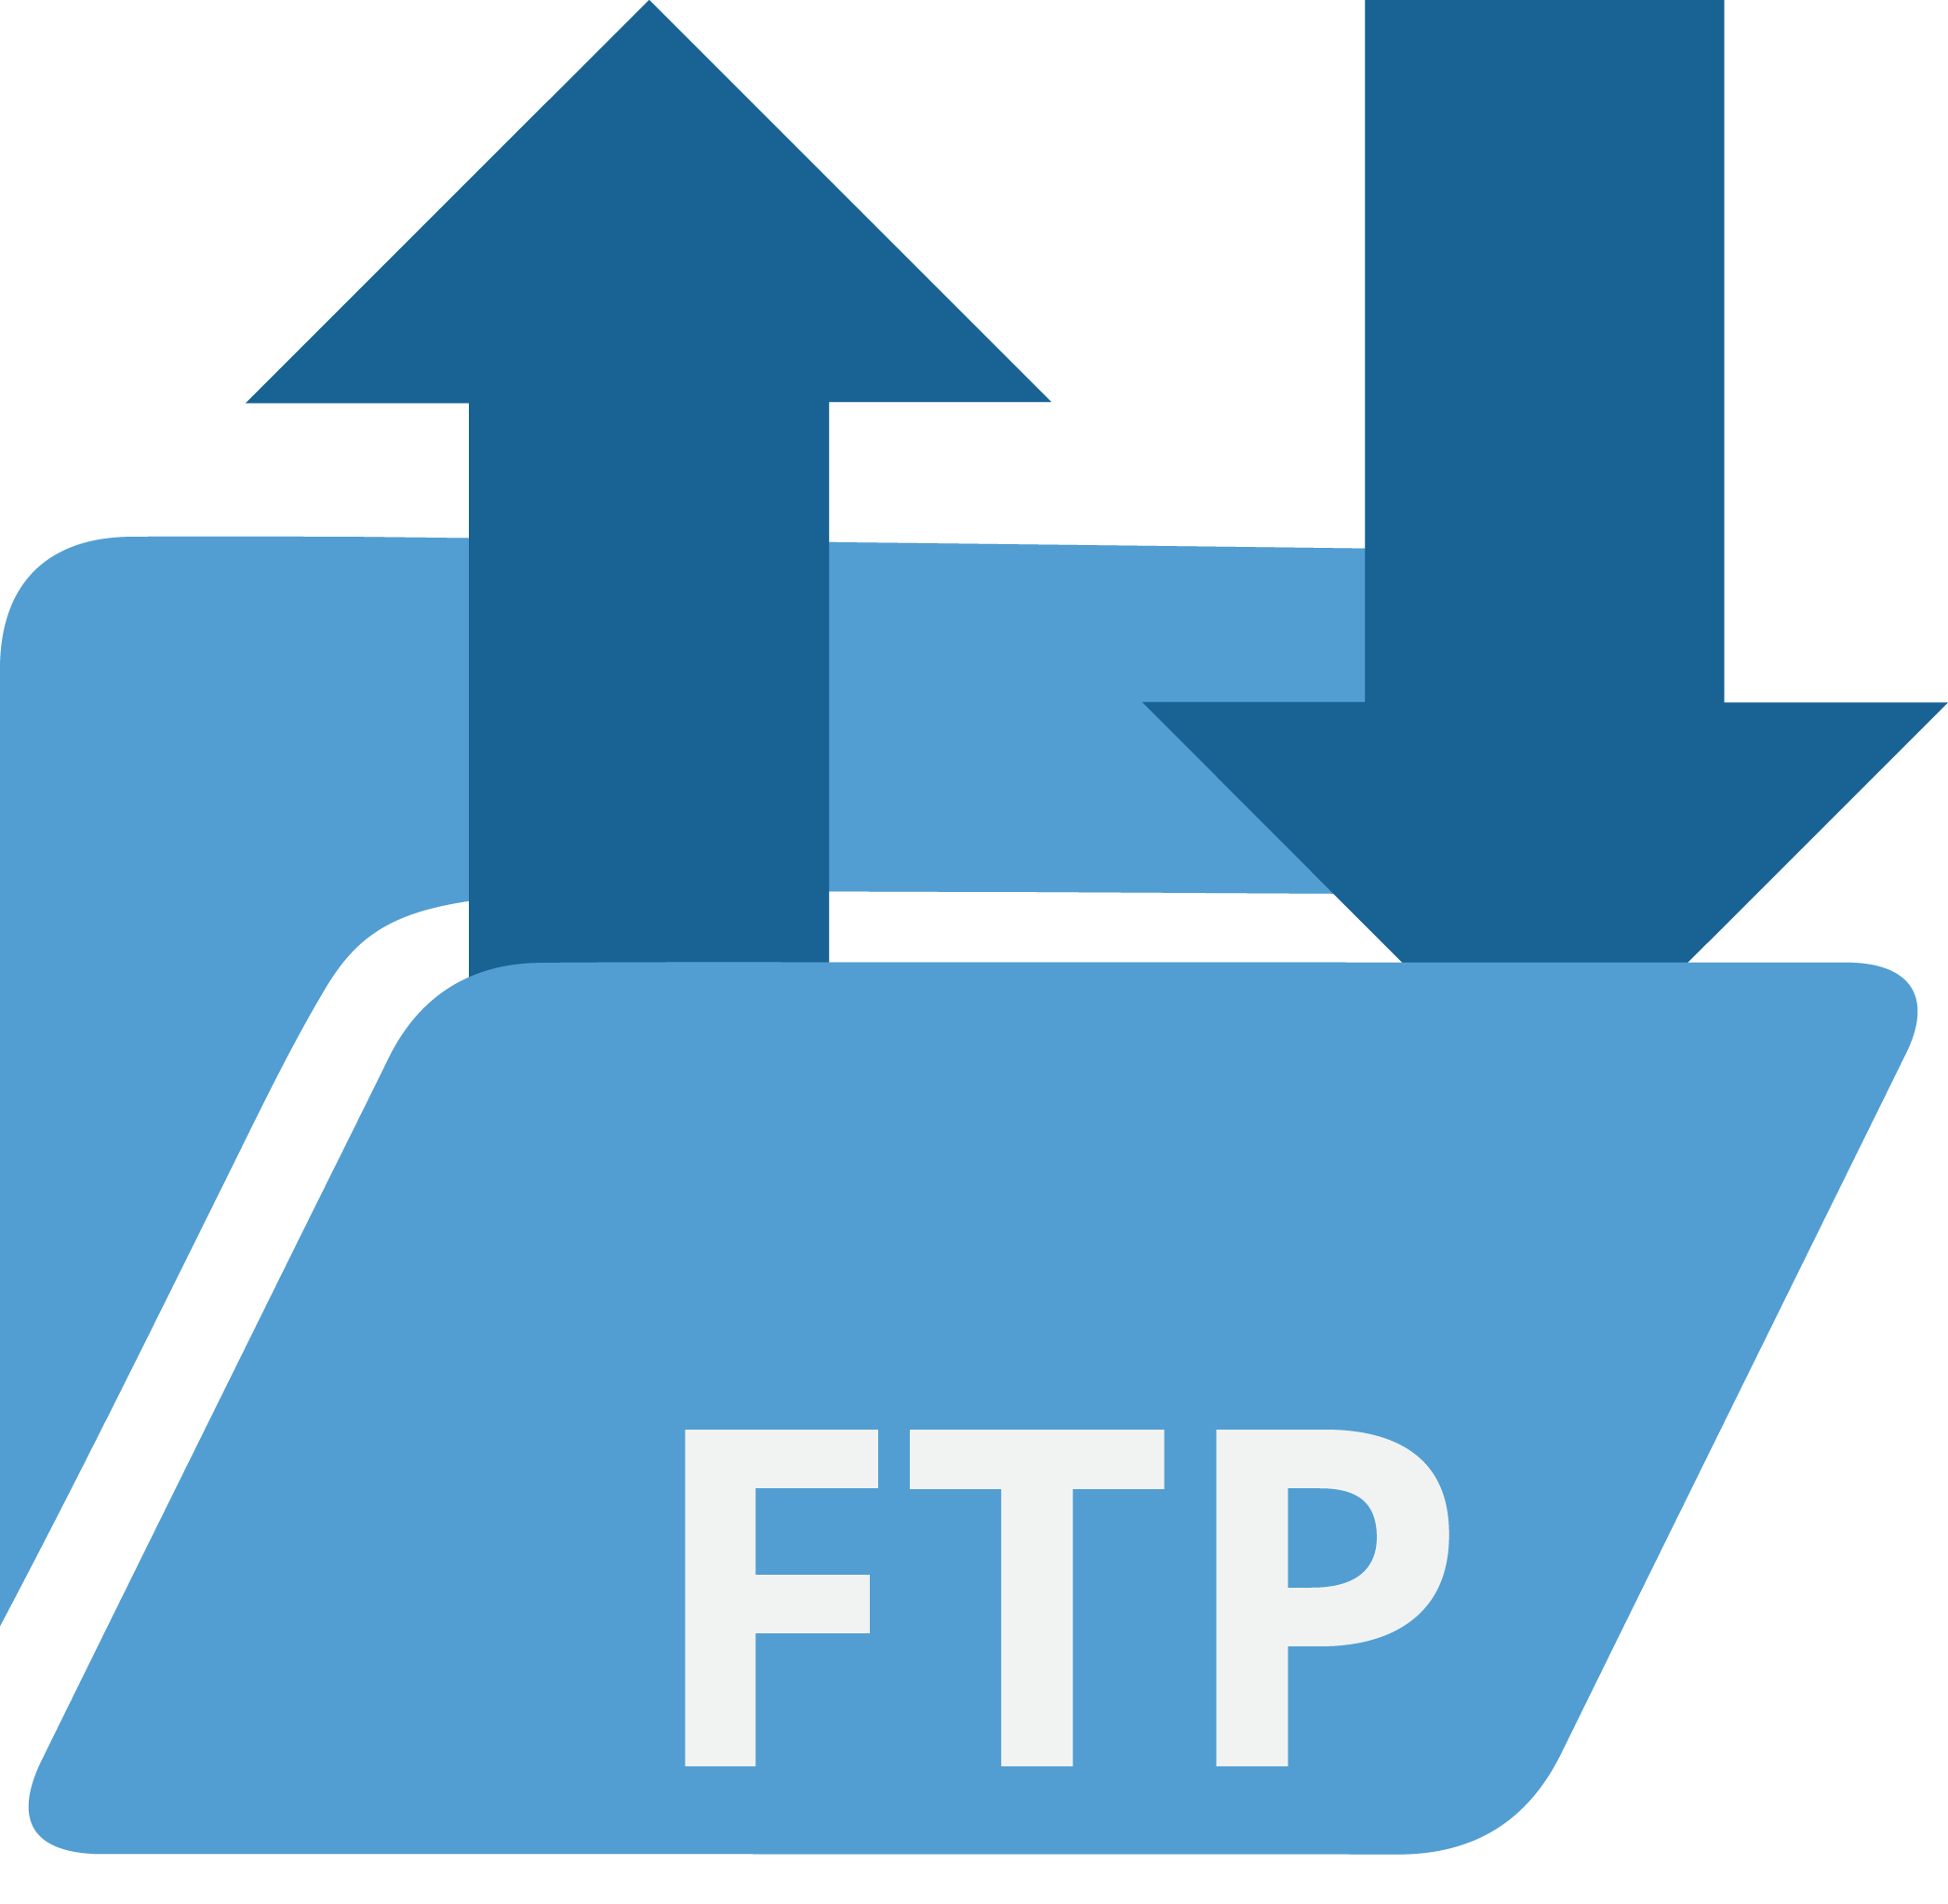 FTP image